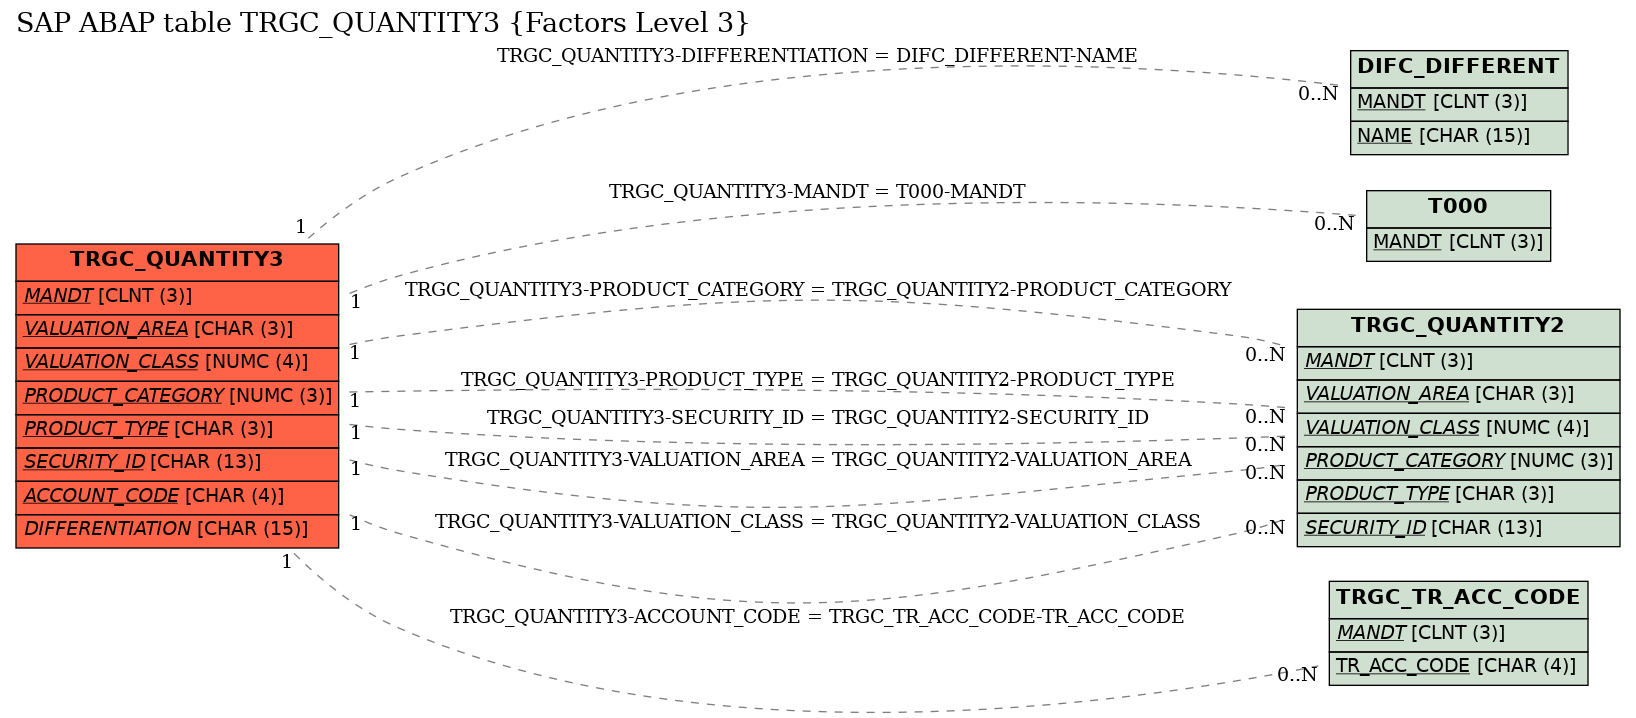 E-R Diagram for table TRGC_QUANTITY3 (Factors Level 3)